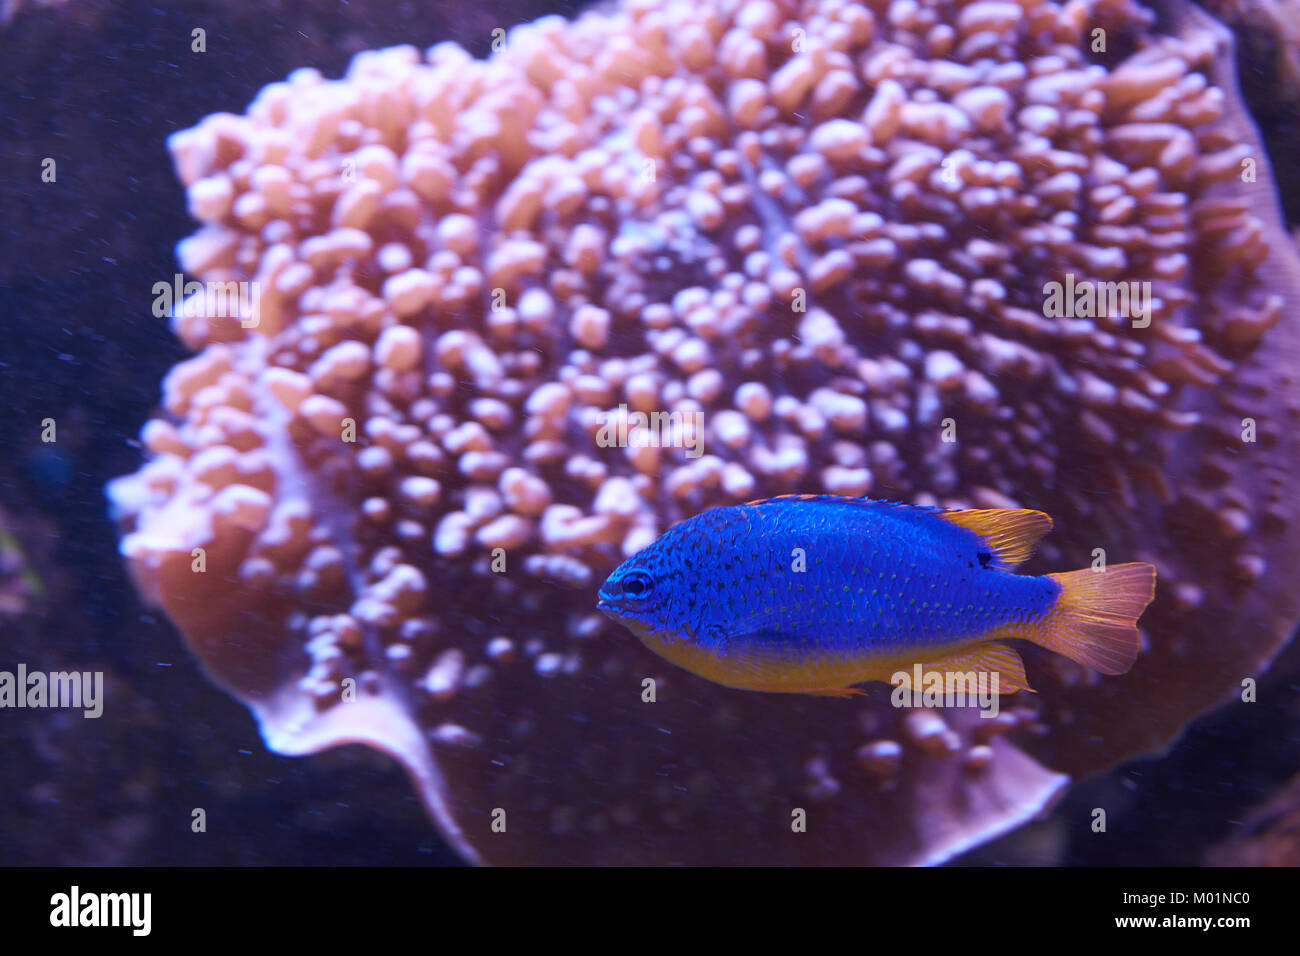 Chrysiptera. Blue fish with orange bottom near coral Stock Photo